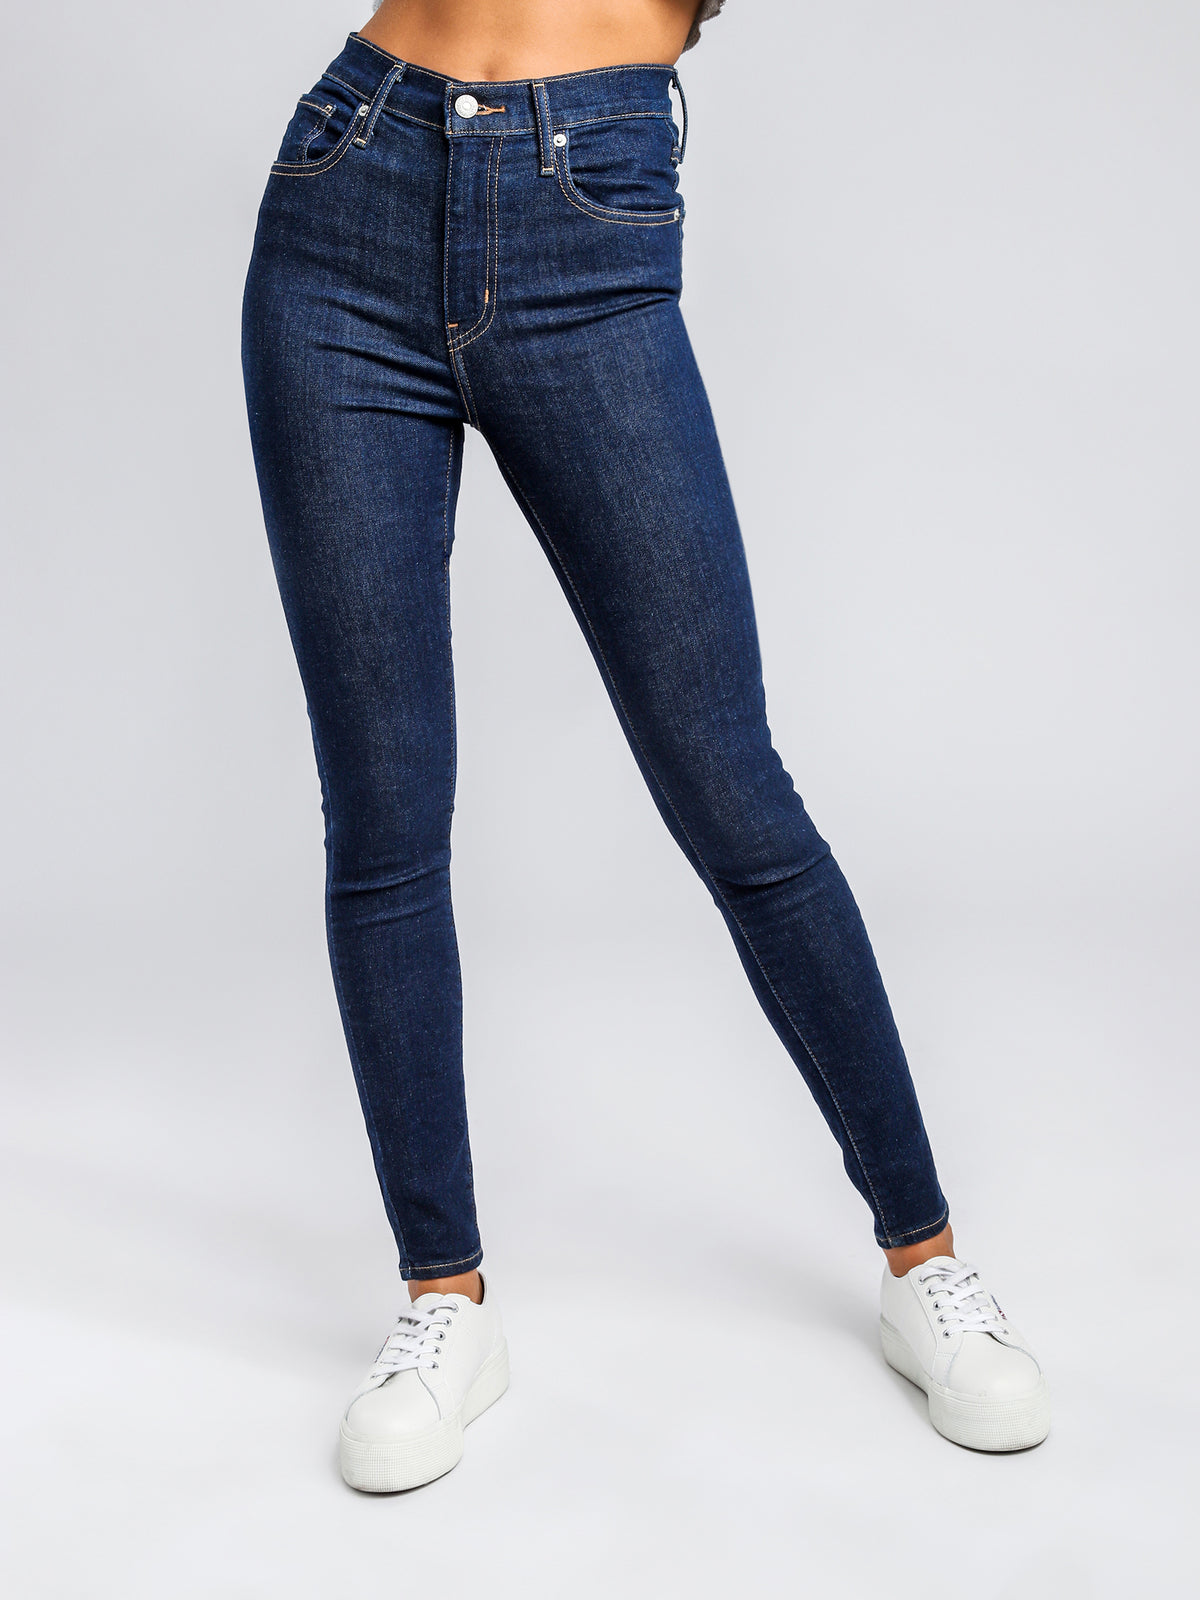 Mile High Super Skinny Jeans in Upgrade Blue Denim